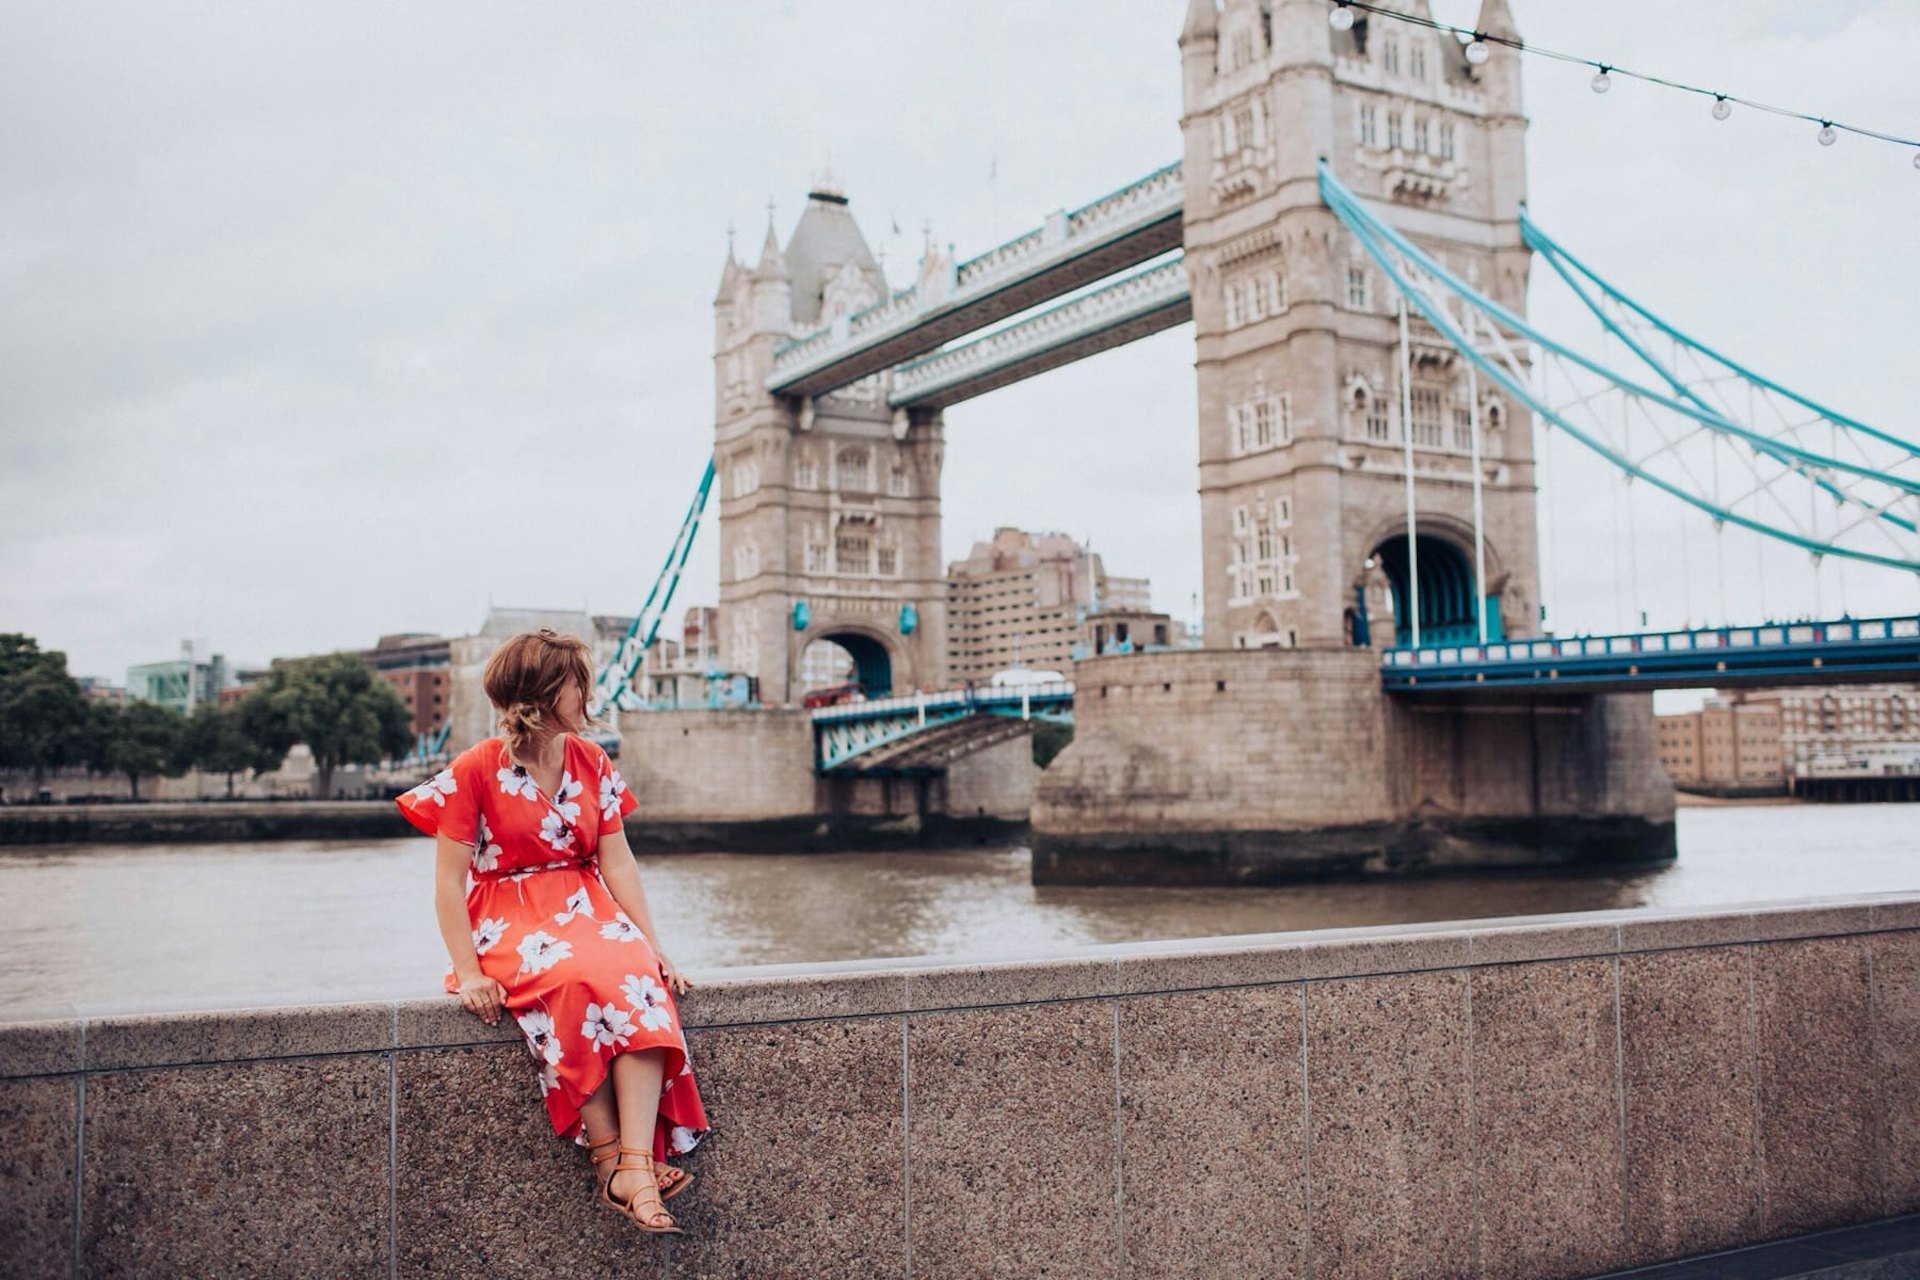 Woman sat on railings near London Tower Bridge